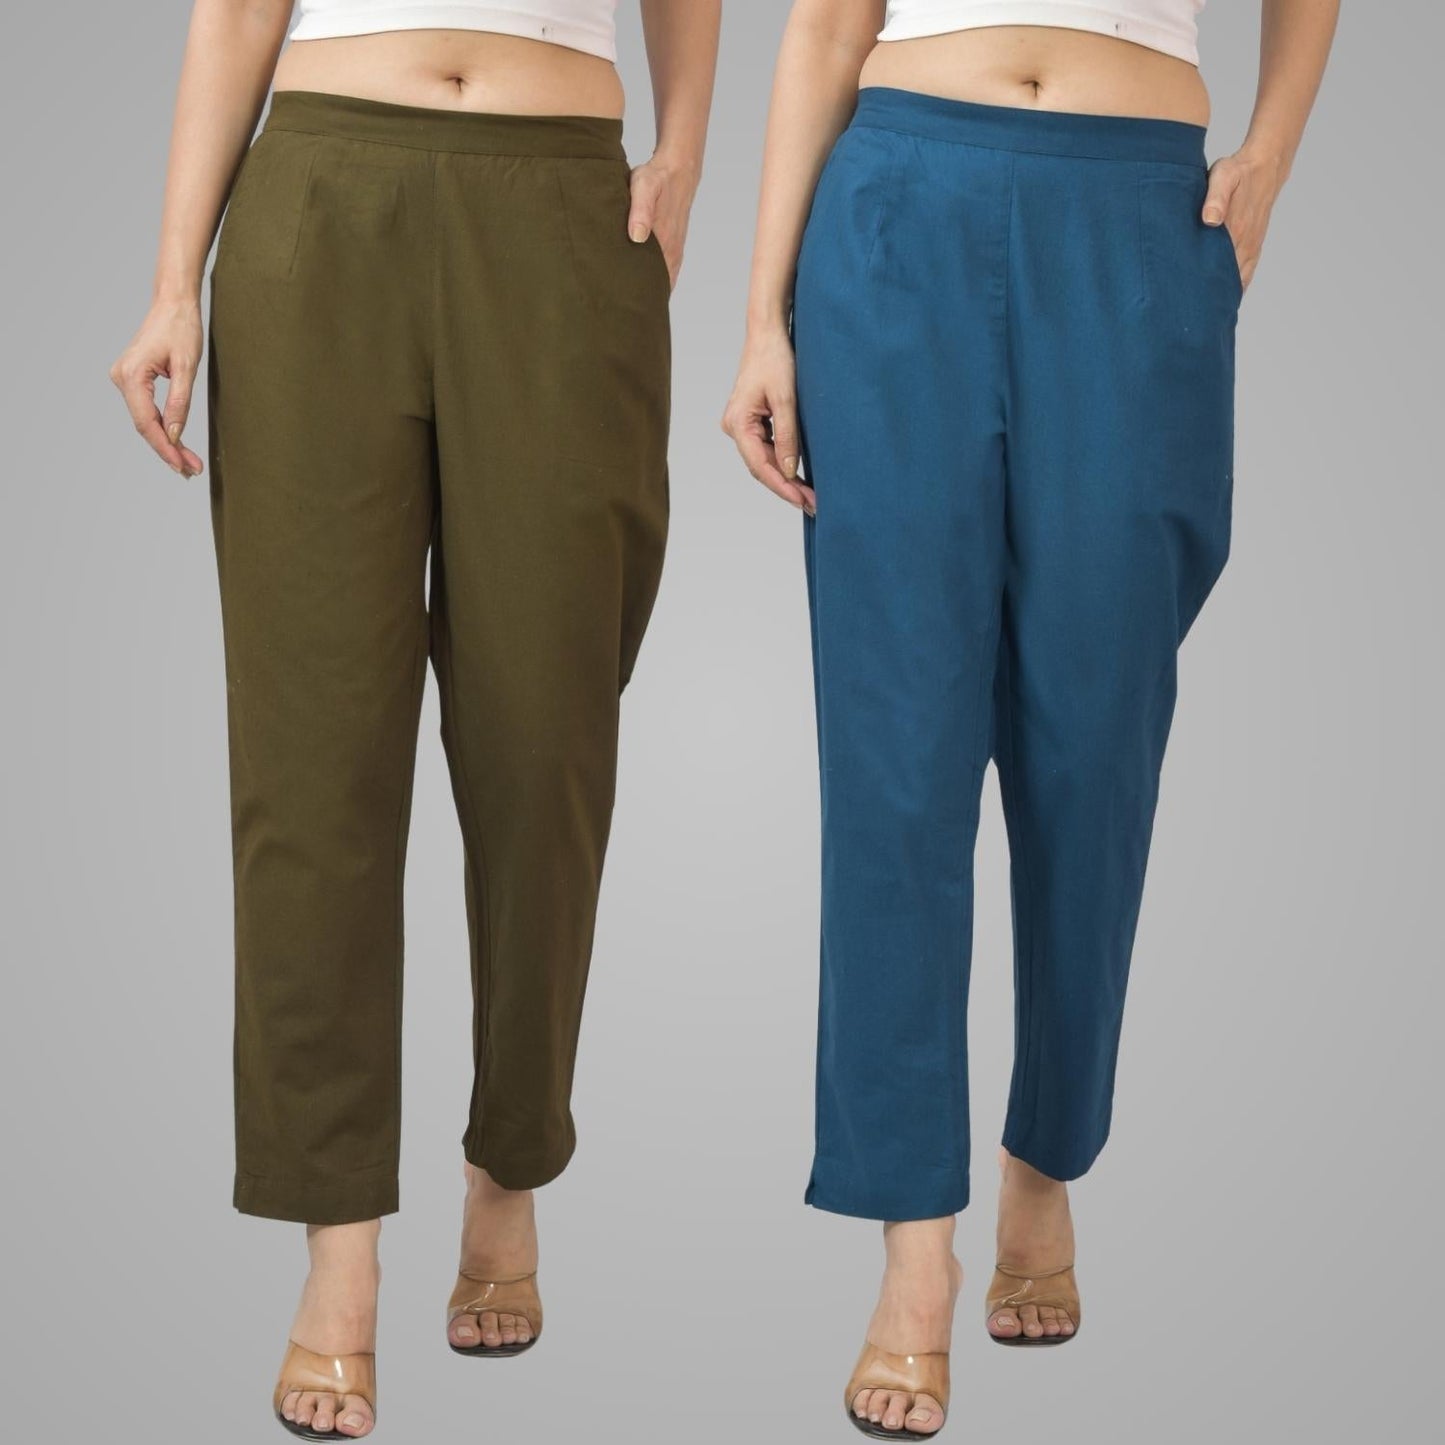 Pack Of 2 Womens Half Elastic Mehndi Green And Teal Blue Deep Pocket Cotton Pants